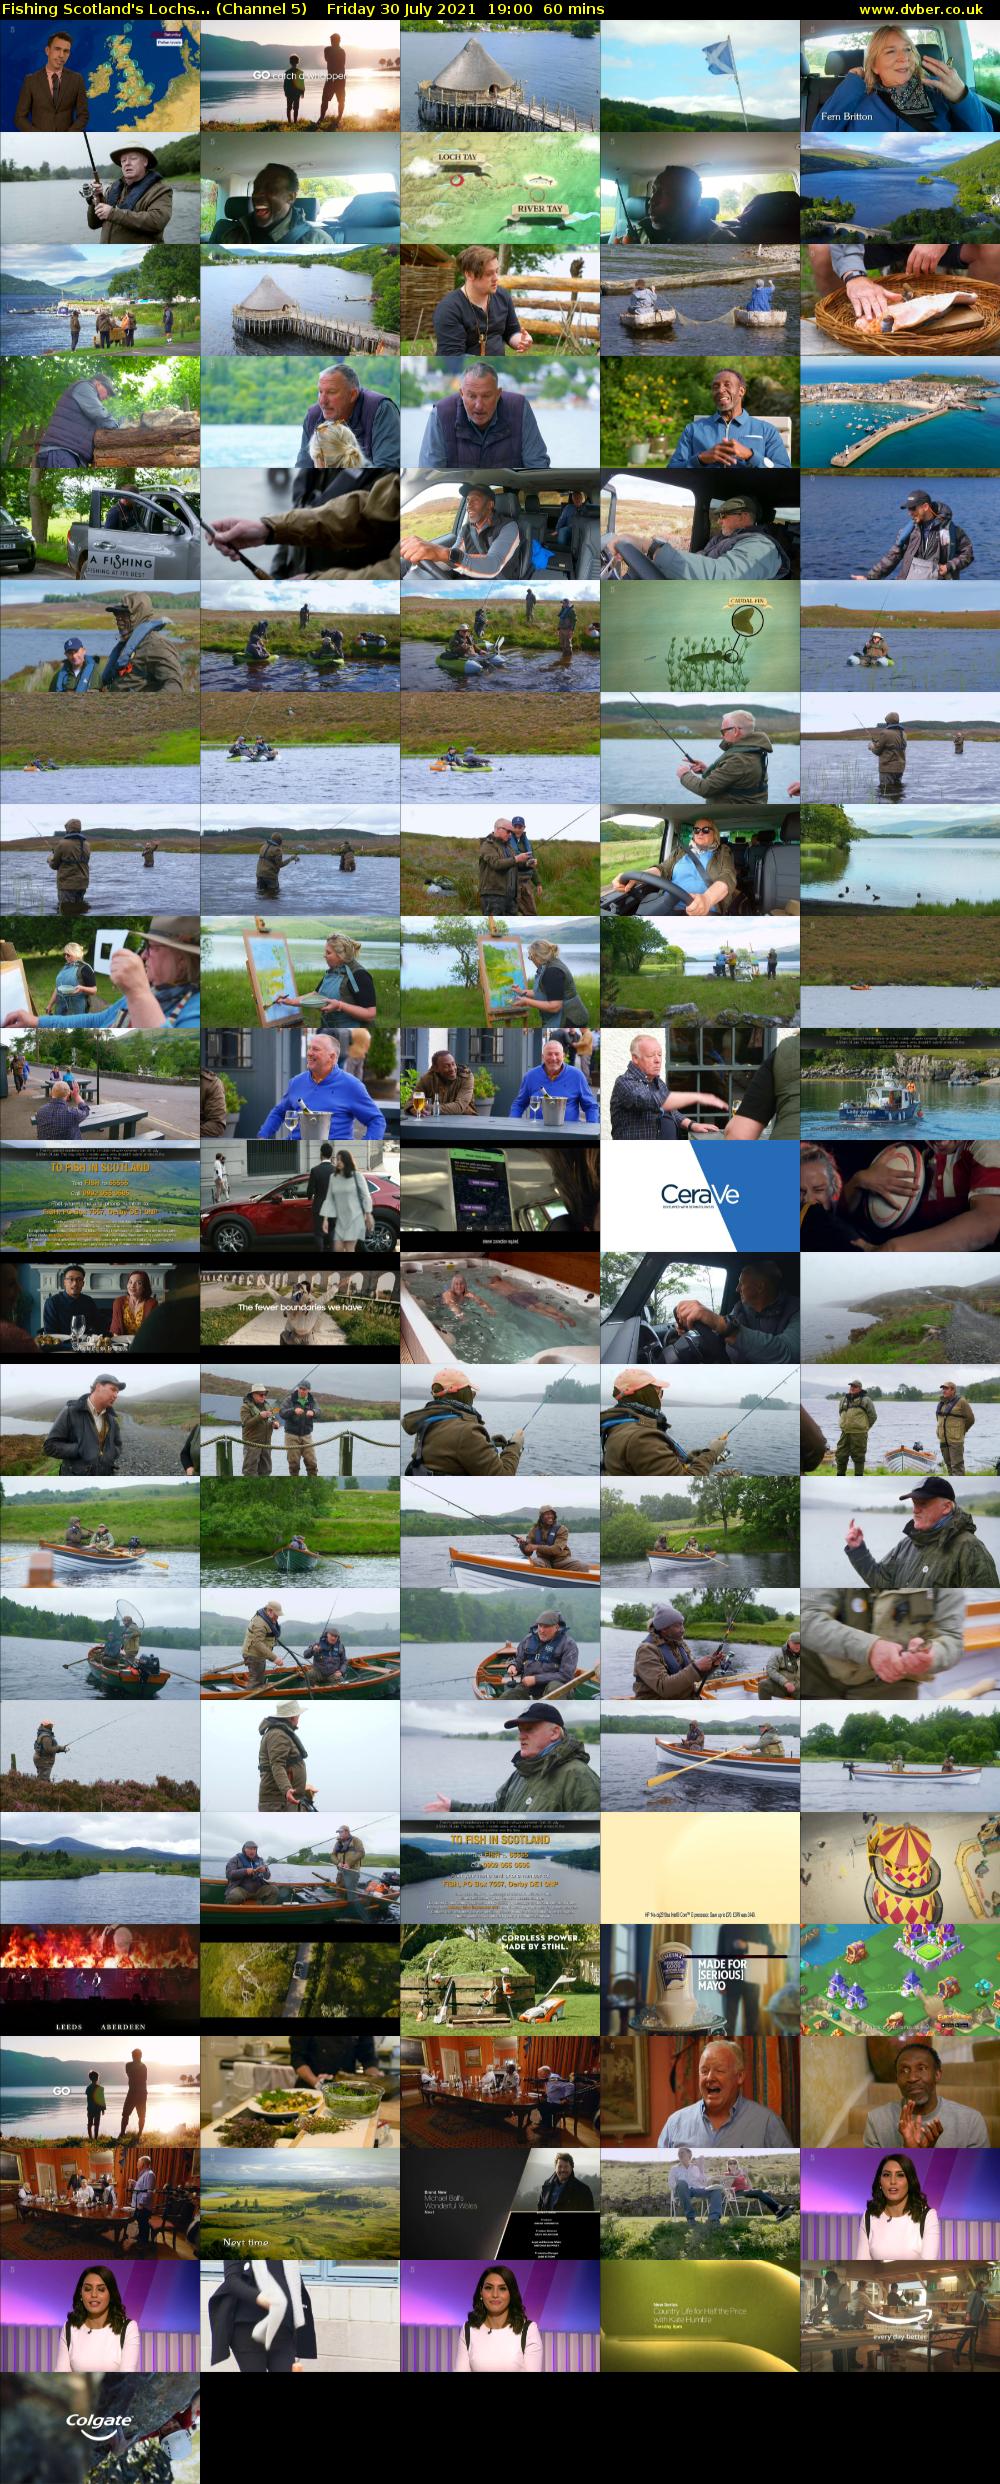 Fishing Scotland's Lochs... (Channel 5) Friday 30 July 2021 19:00 - 20:00